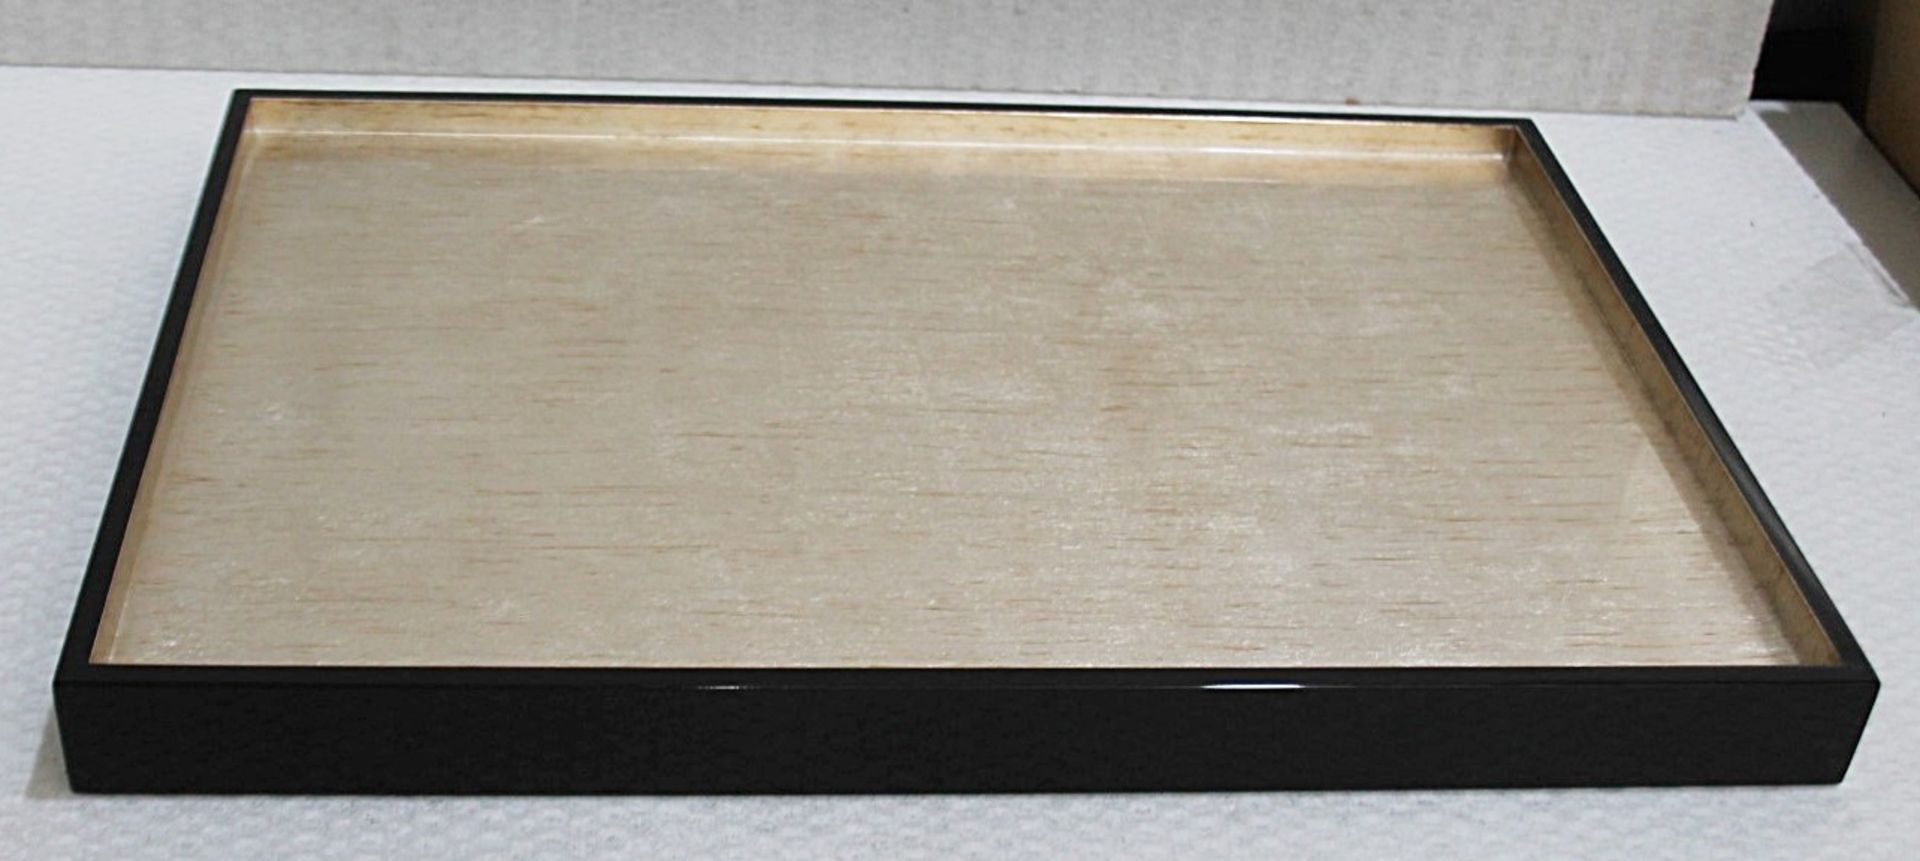 1 x POSH TRADING COMPANY Large Silver Leaf Windsor Tray (52cm x 36cm) - Original Price £160.00 - Image 8 of 9